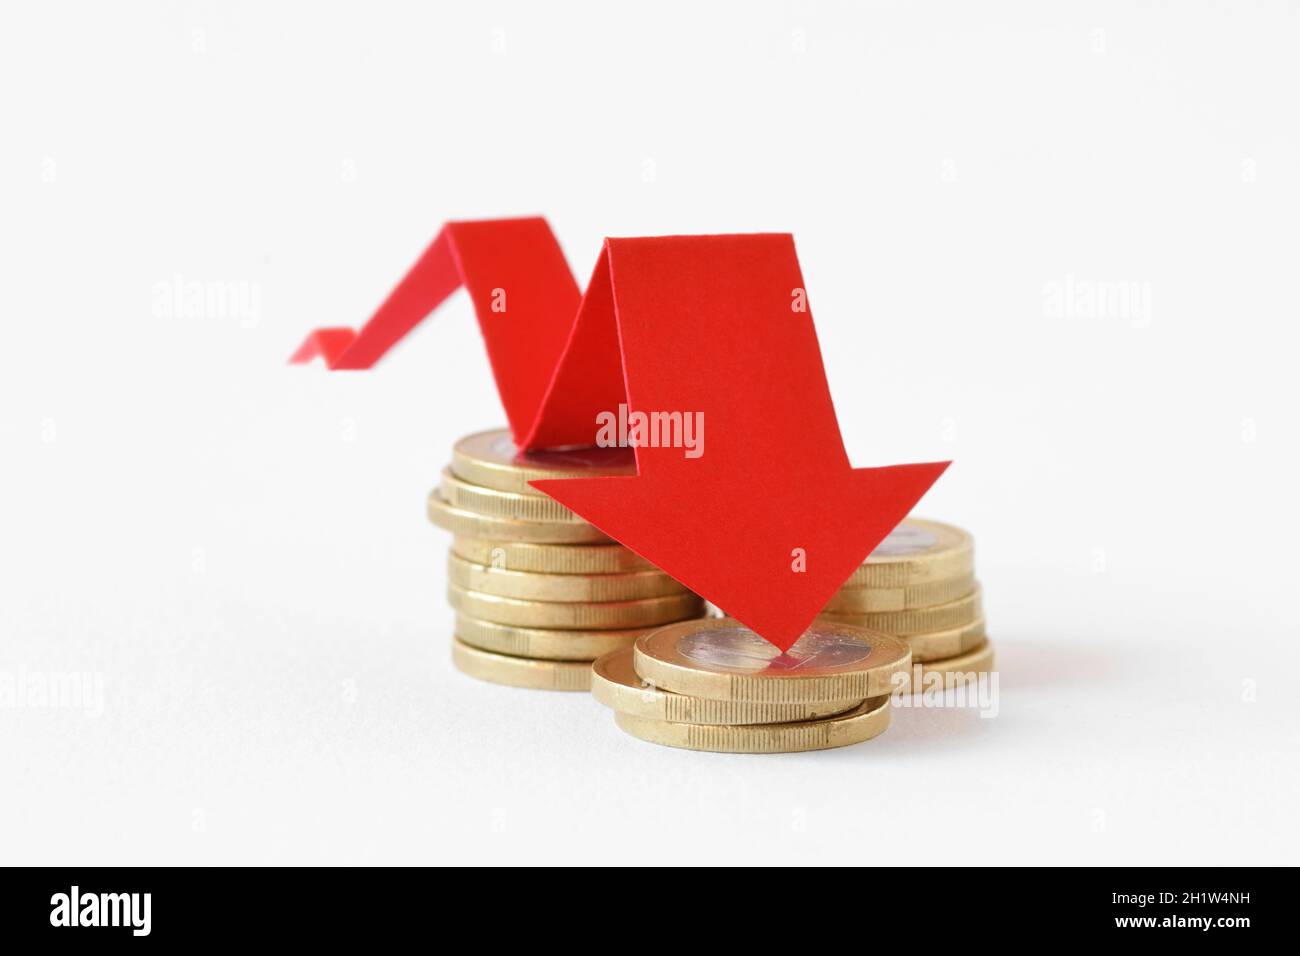 Pilas de monedas en euros con flecha roja descendente - concepto de pérdida de dinero Foto de stock